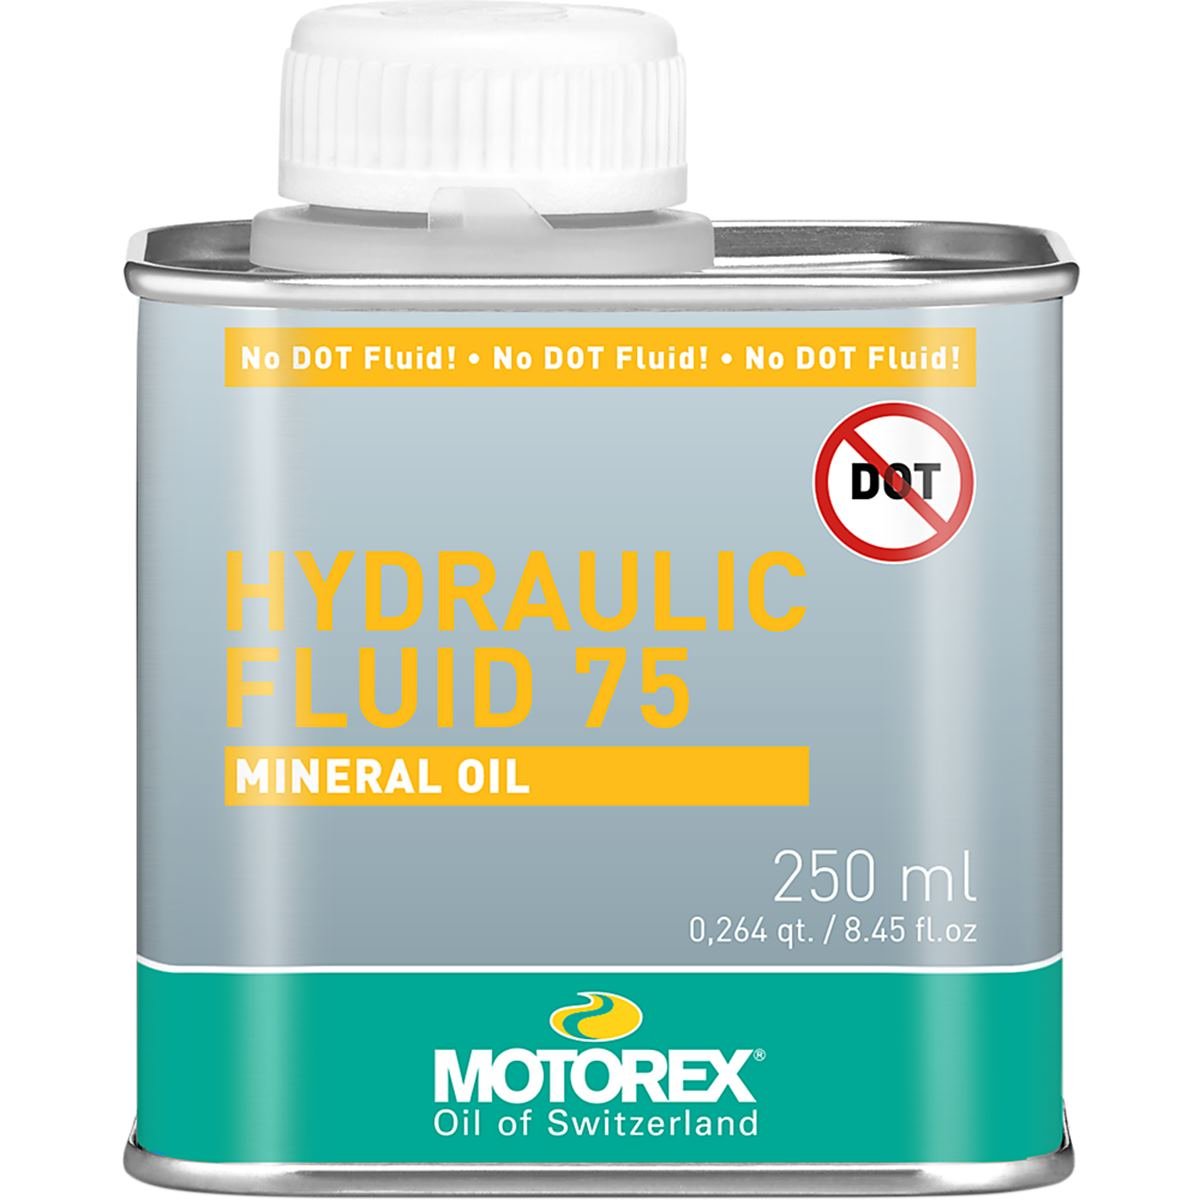 Motorex Mineralöl Fluid 75